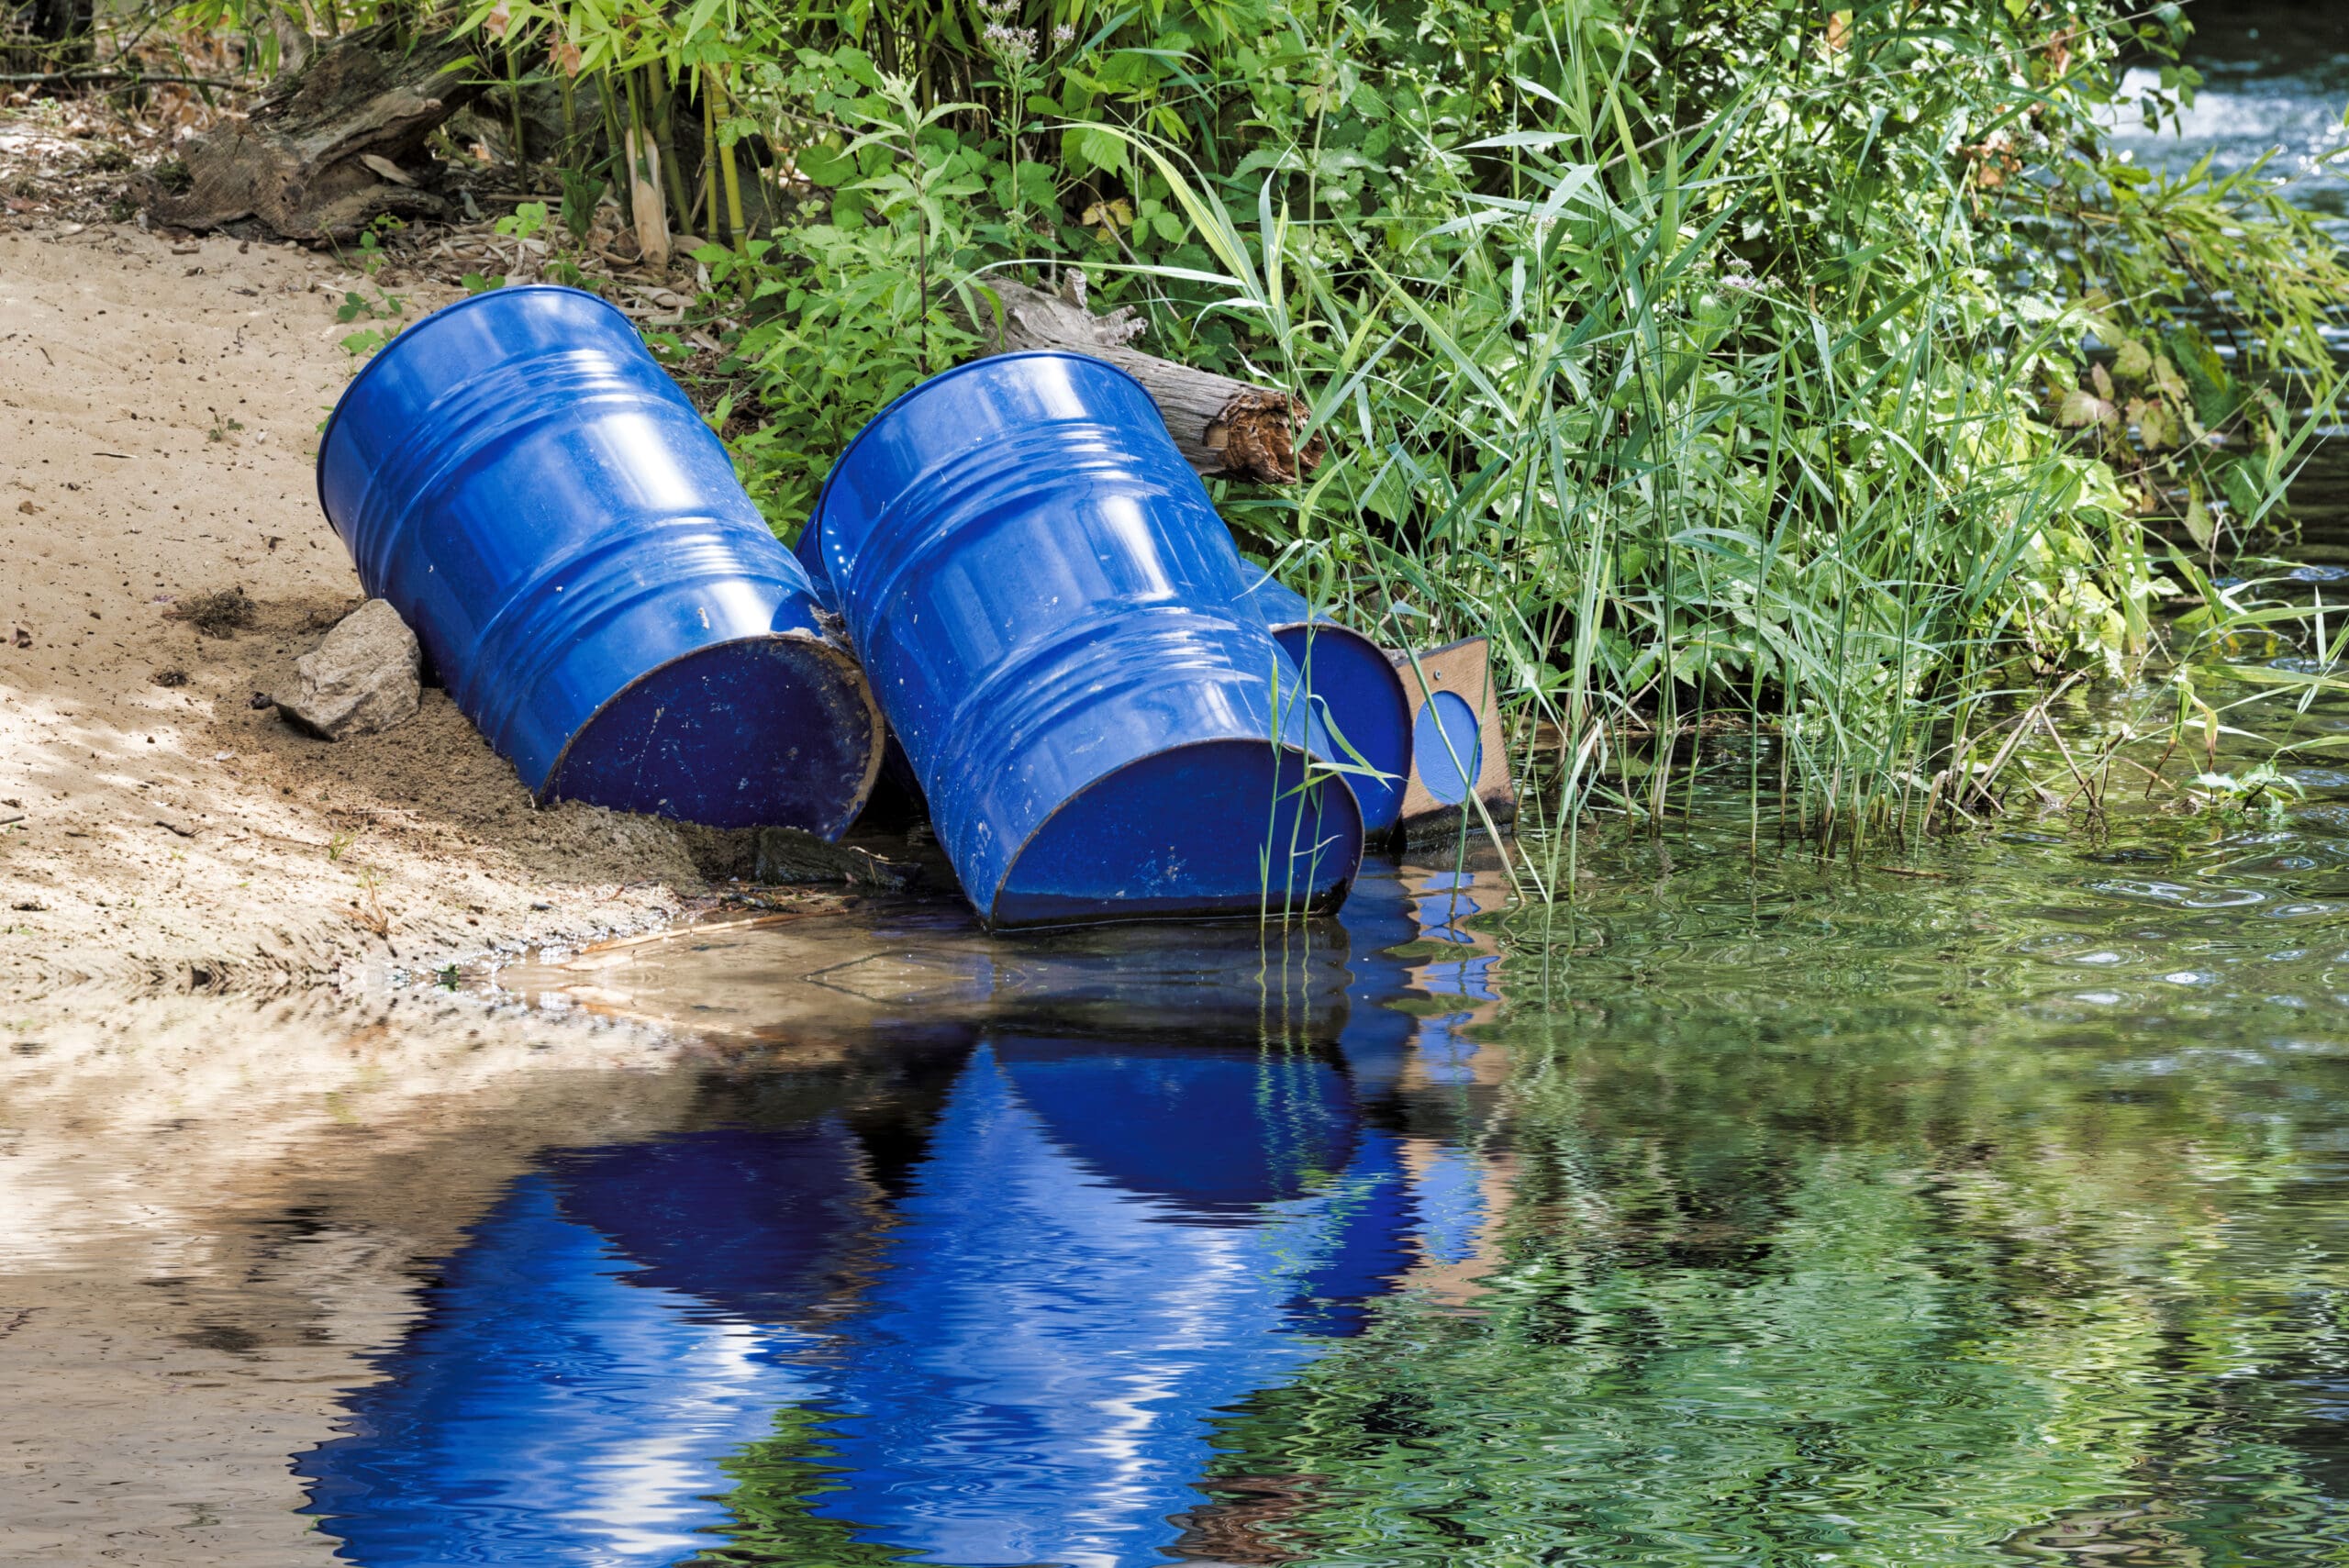 blue toxic chemical barrels sitting along the river’s edge.